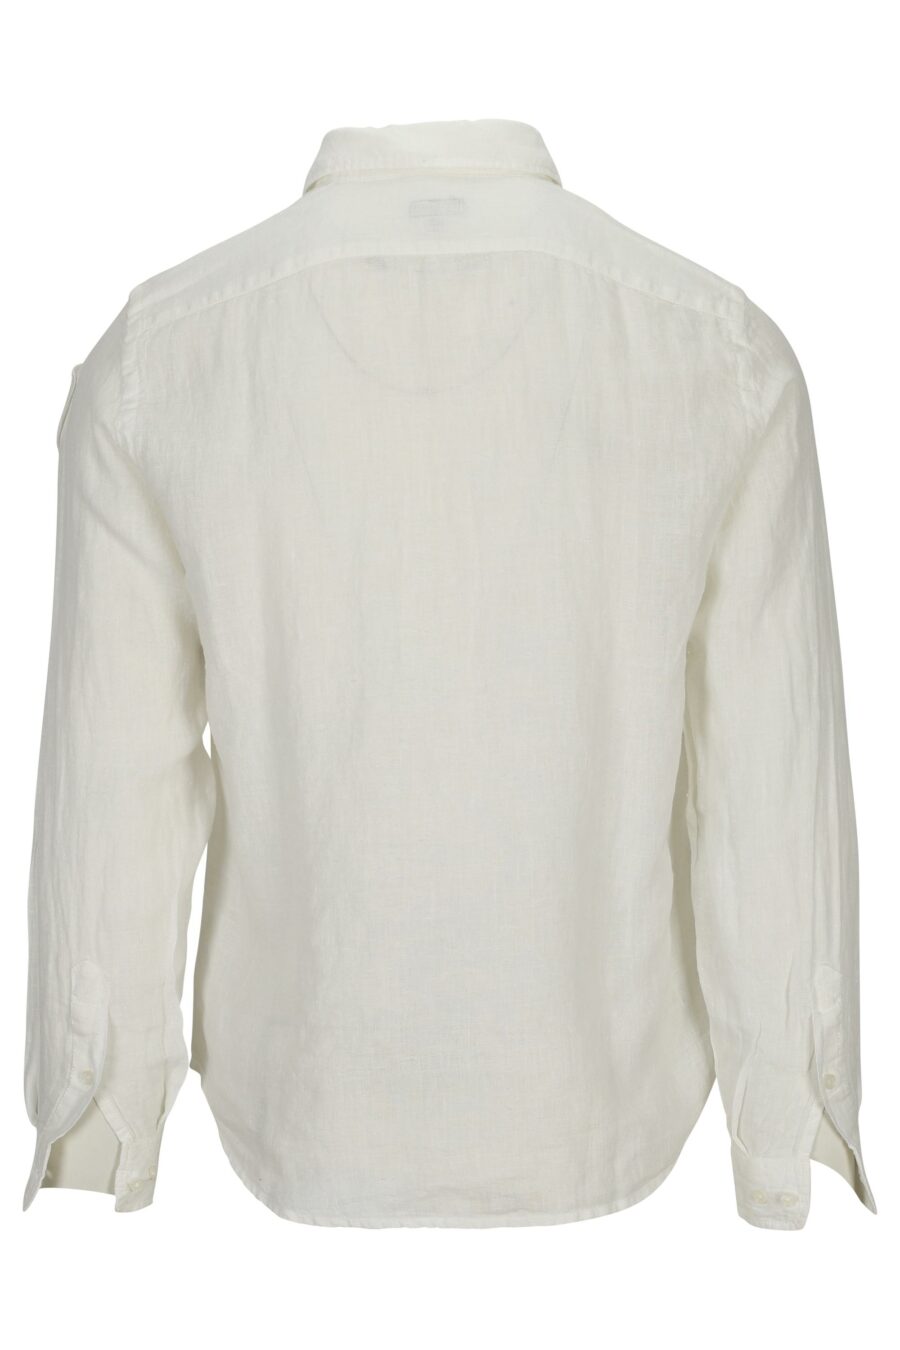 White shirt with mini-logo shield - 8058610776718 1